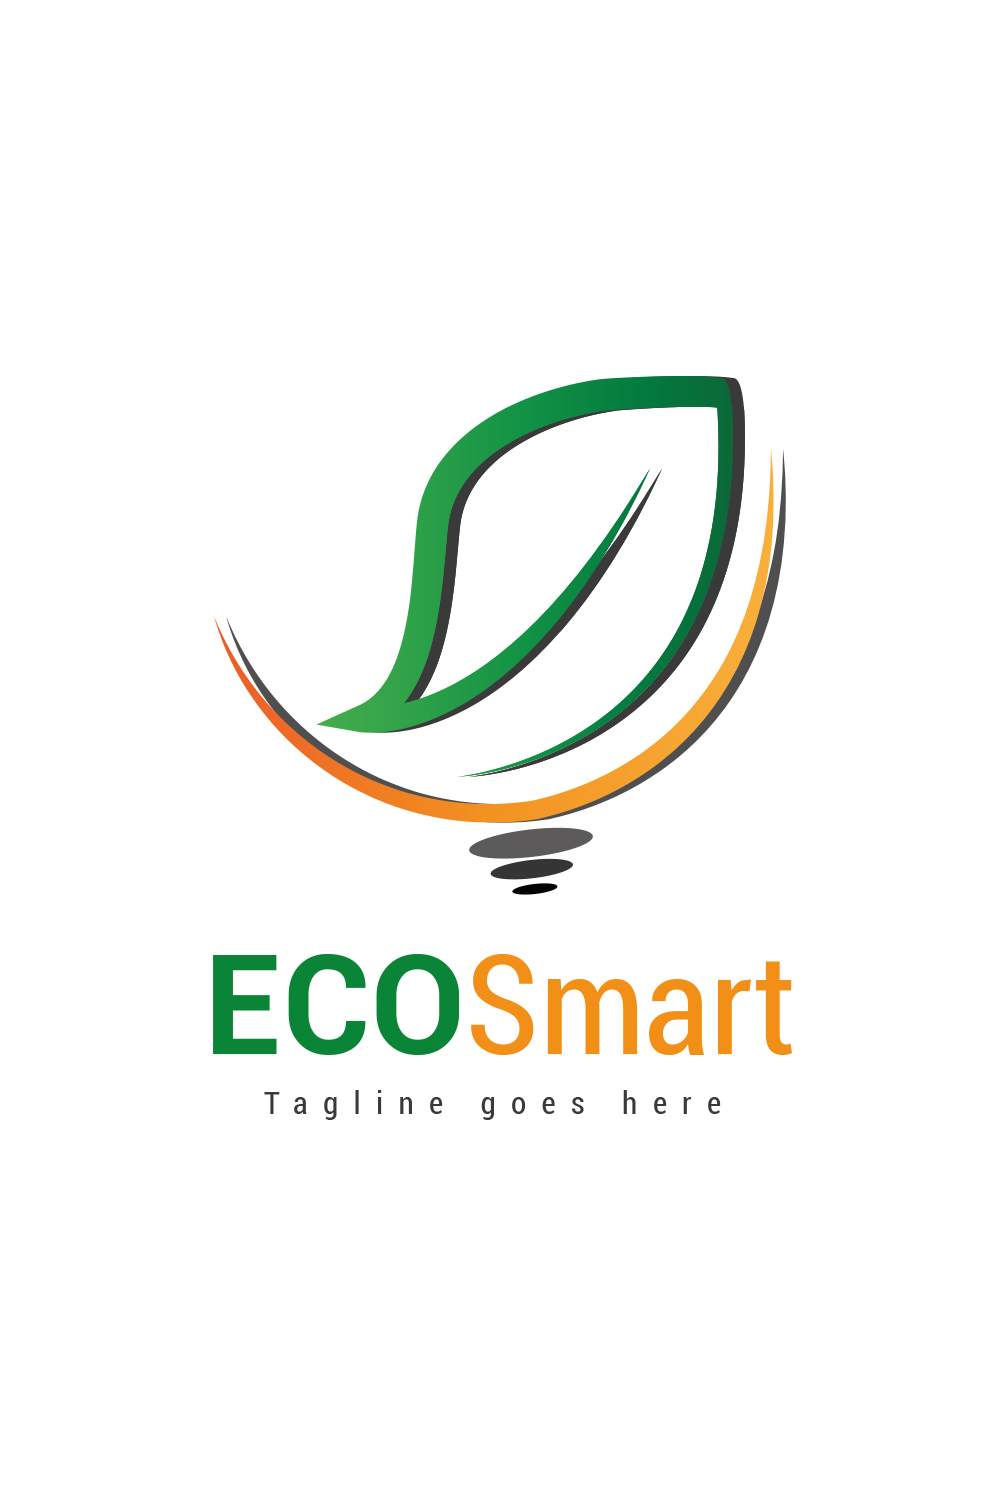 EcoSmart 3d logo design pinterest preview image.